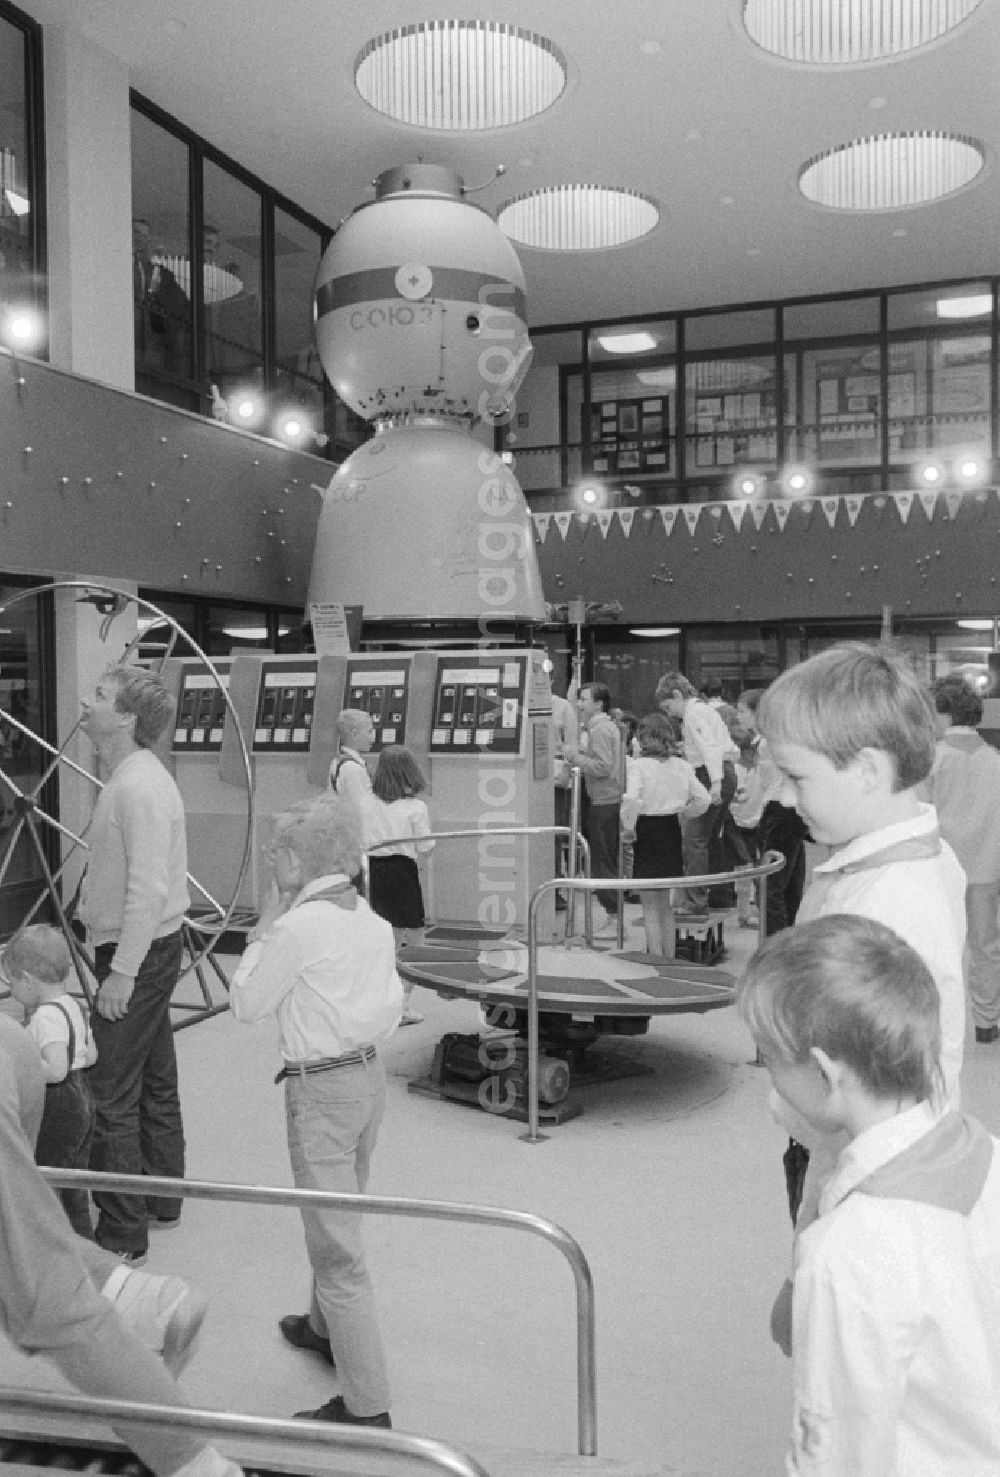 GDR image archive: Berlin - Pioneers in the Pioneer Palace - cosmonaut center in the Wuhlheide in Berlin